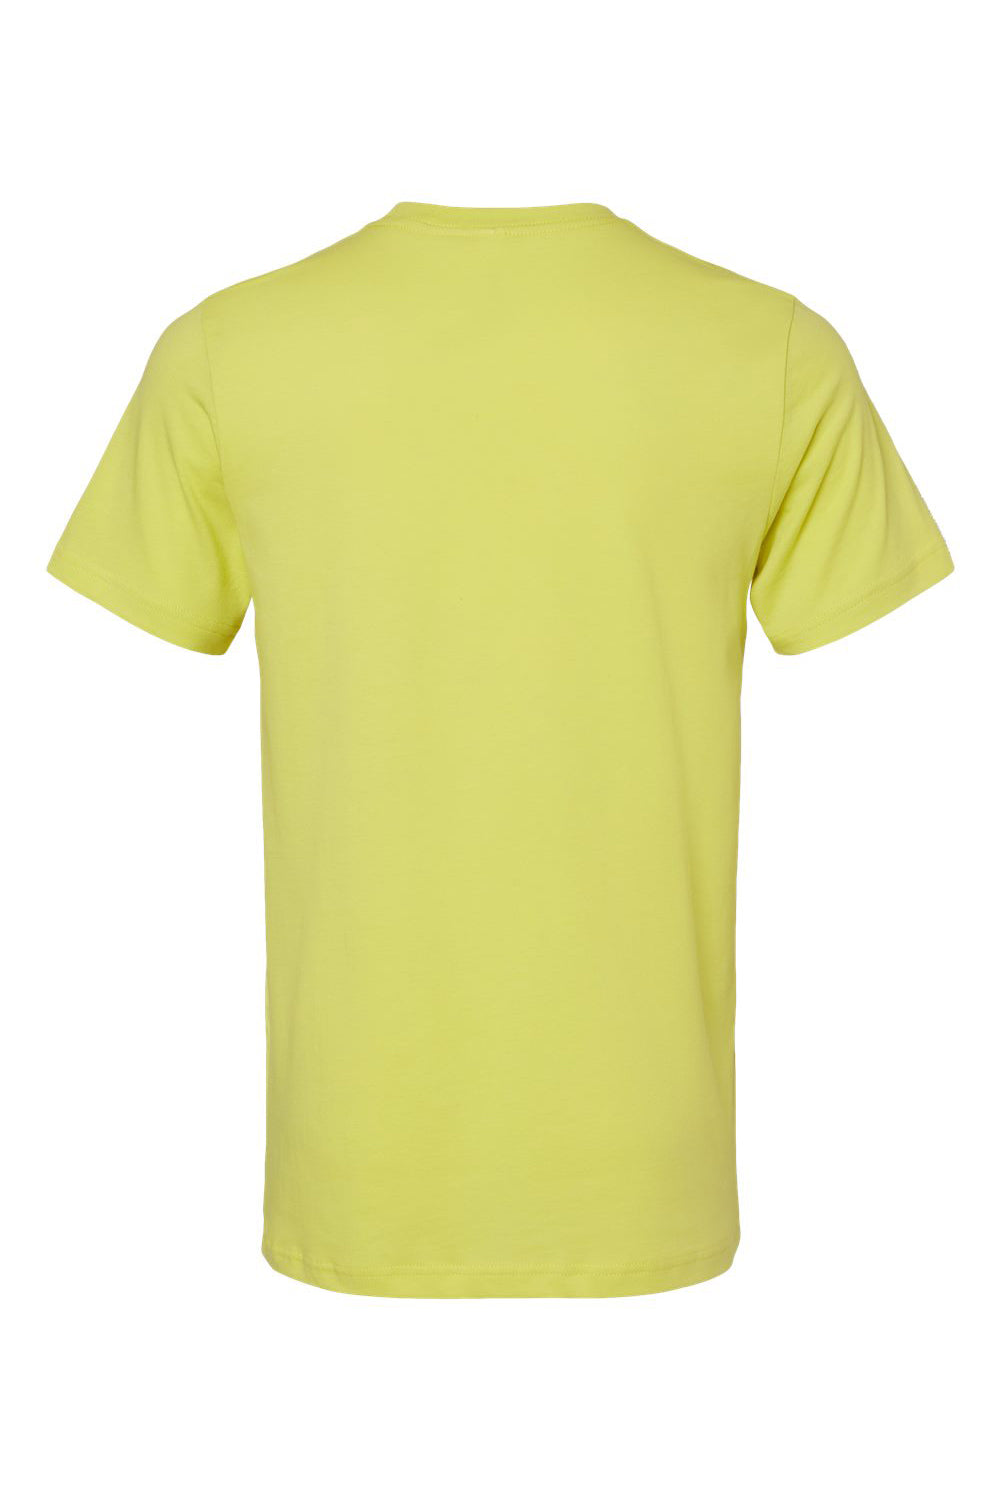 Bella + Canvas BC3001/3001C Mens Jersey Short Sleeve Crewneck T-Shirt Strobe Green Flat Back